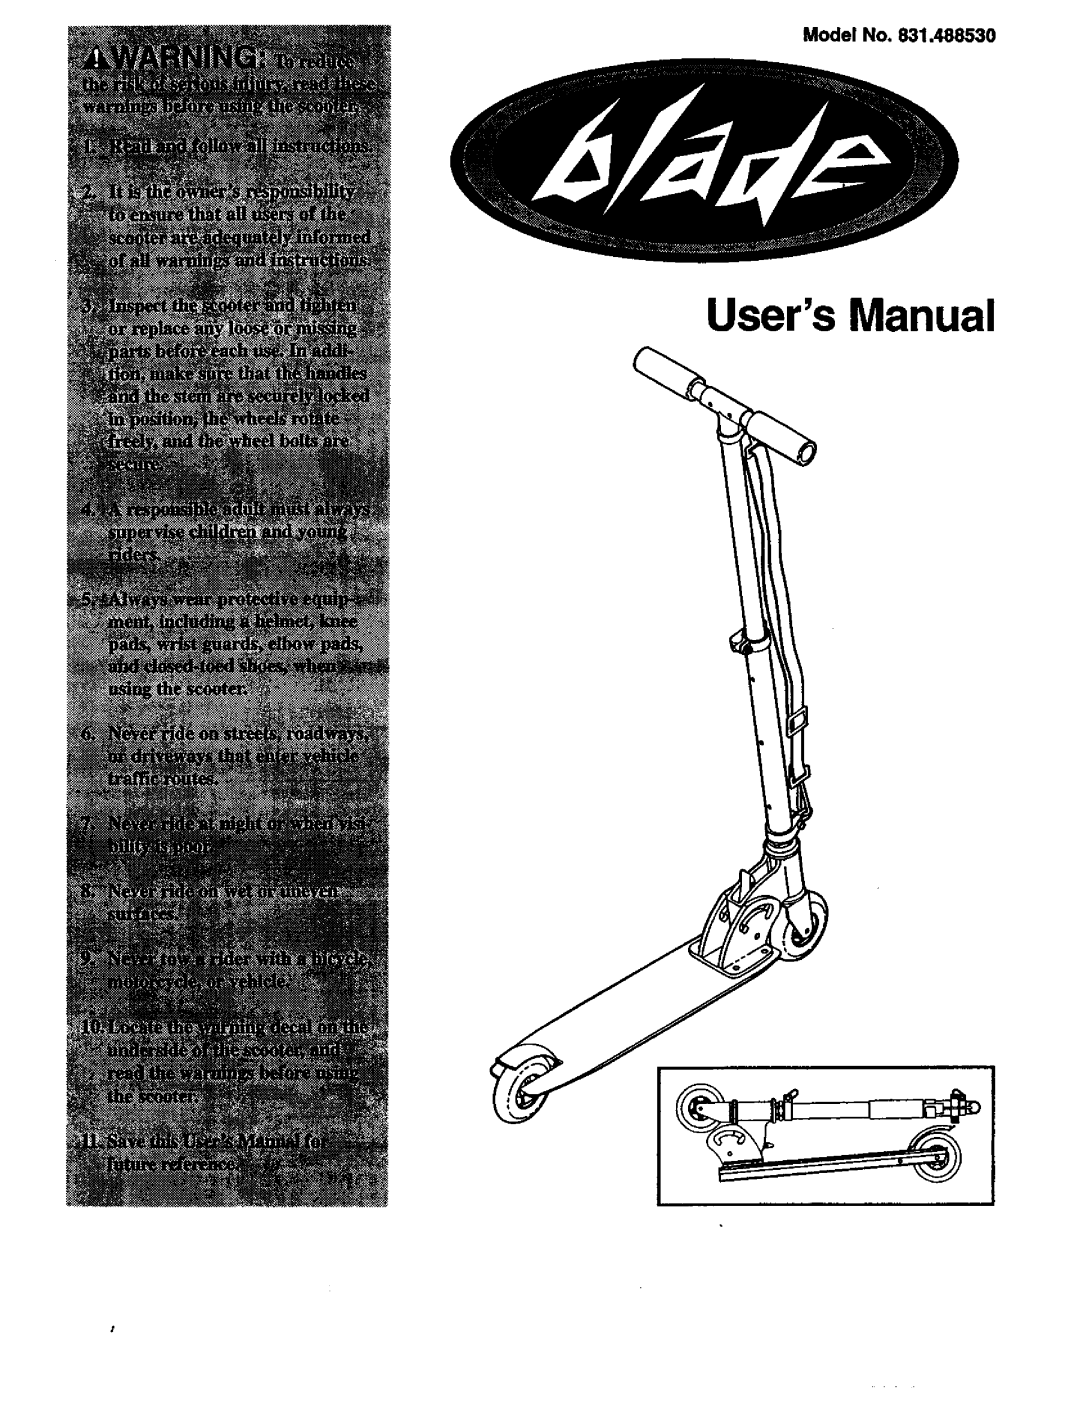 Blade ICE 831.48853 user manual UsersManual, Model No 